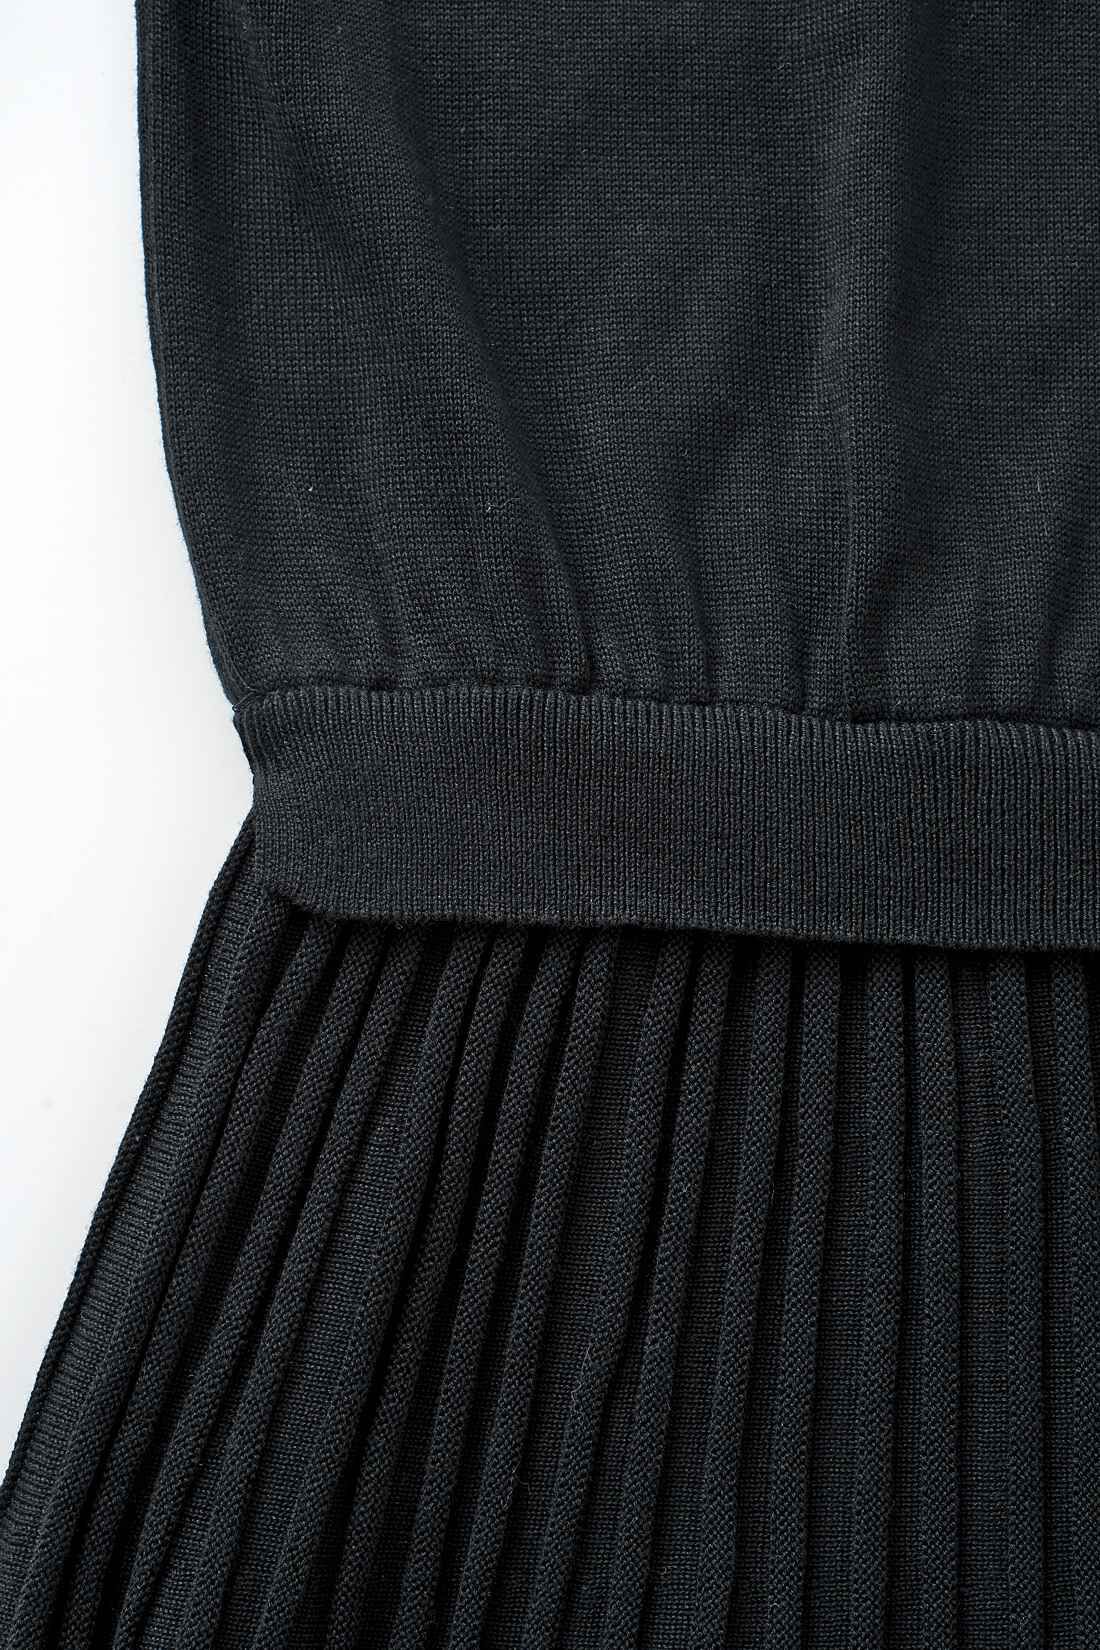 DRECO by IEDIT|DRECO by IEDIT プリーツスカート風の表情を出したドッキングニットワンピース〈ブラック〉|スカート部分は凹凸でプリーツ風のシルエットを再現。